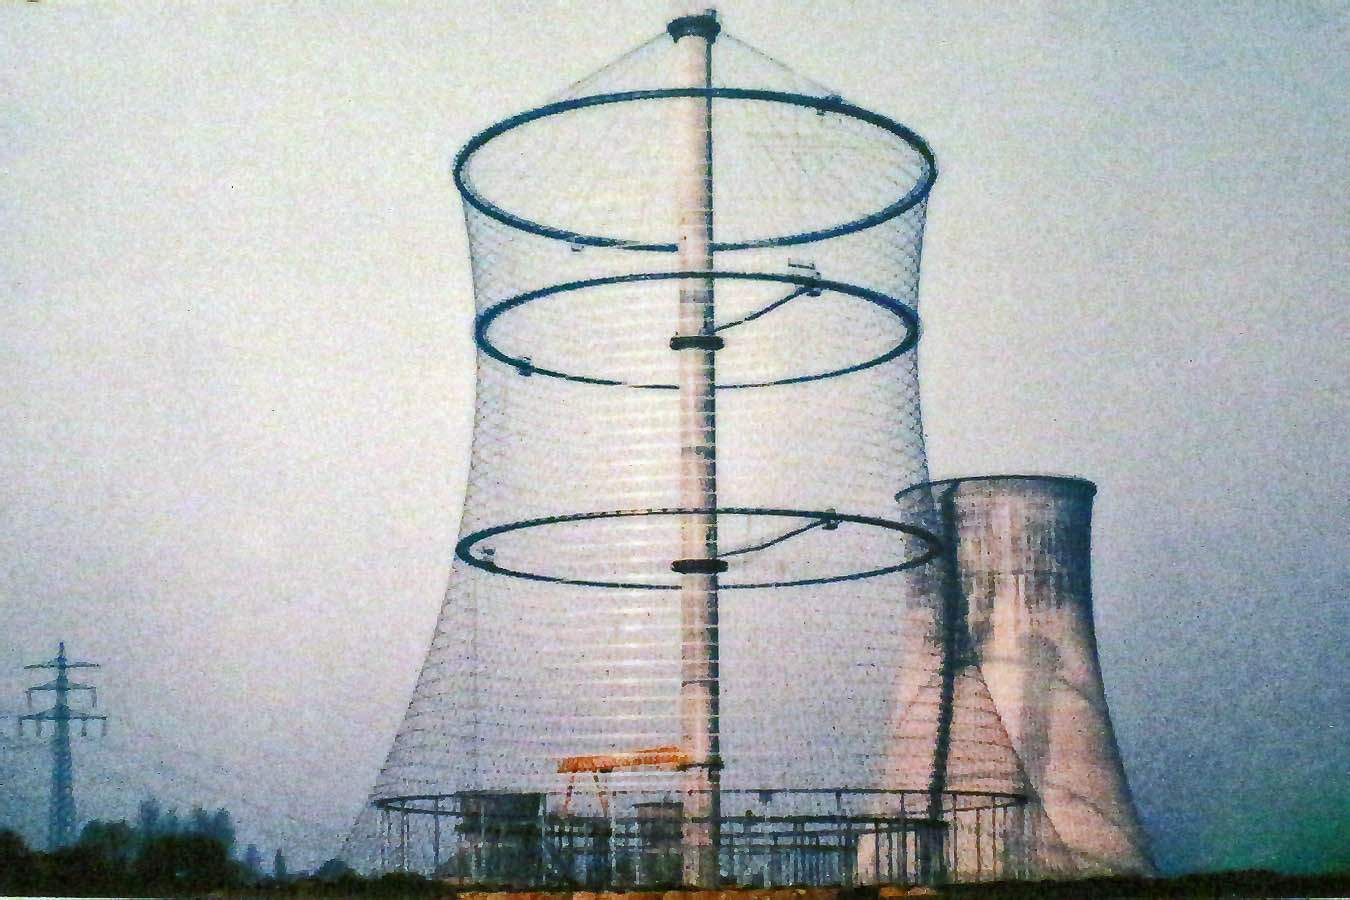 Градирня в Шмехаузен. Хамм, Германия. Инженер Йорг Шлайх. 1964